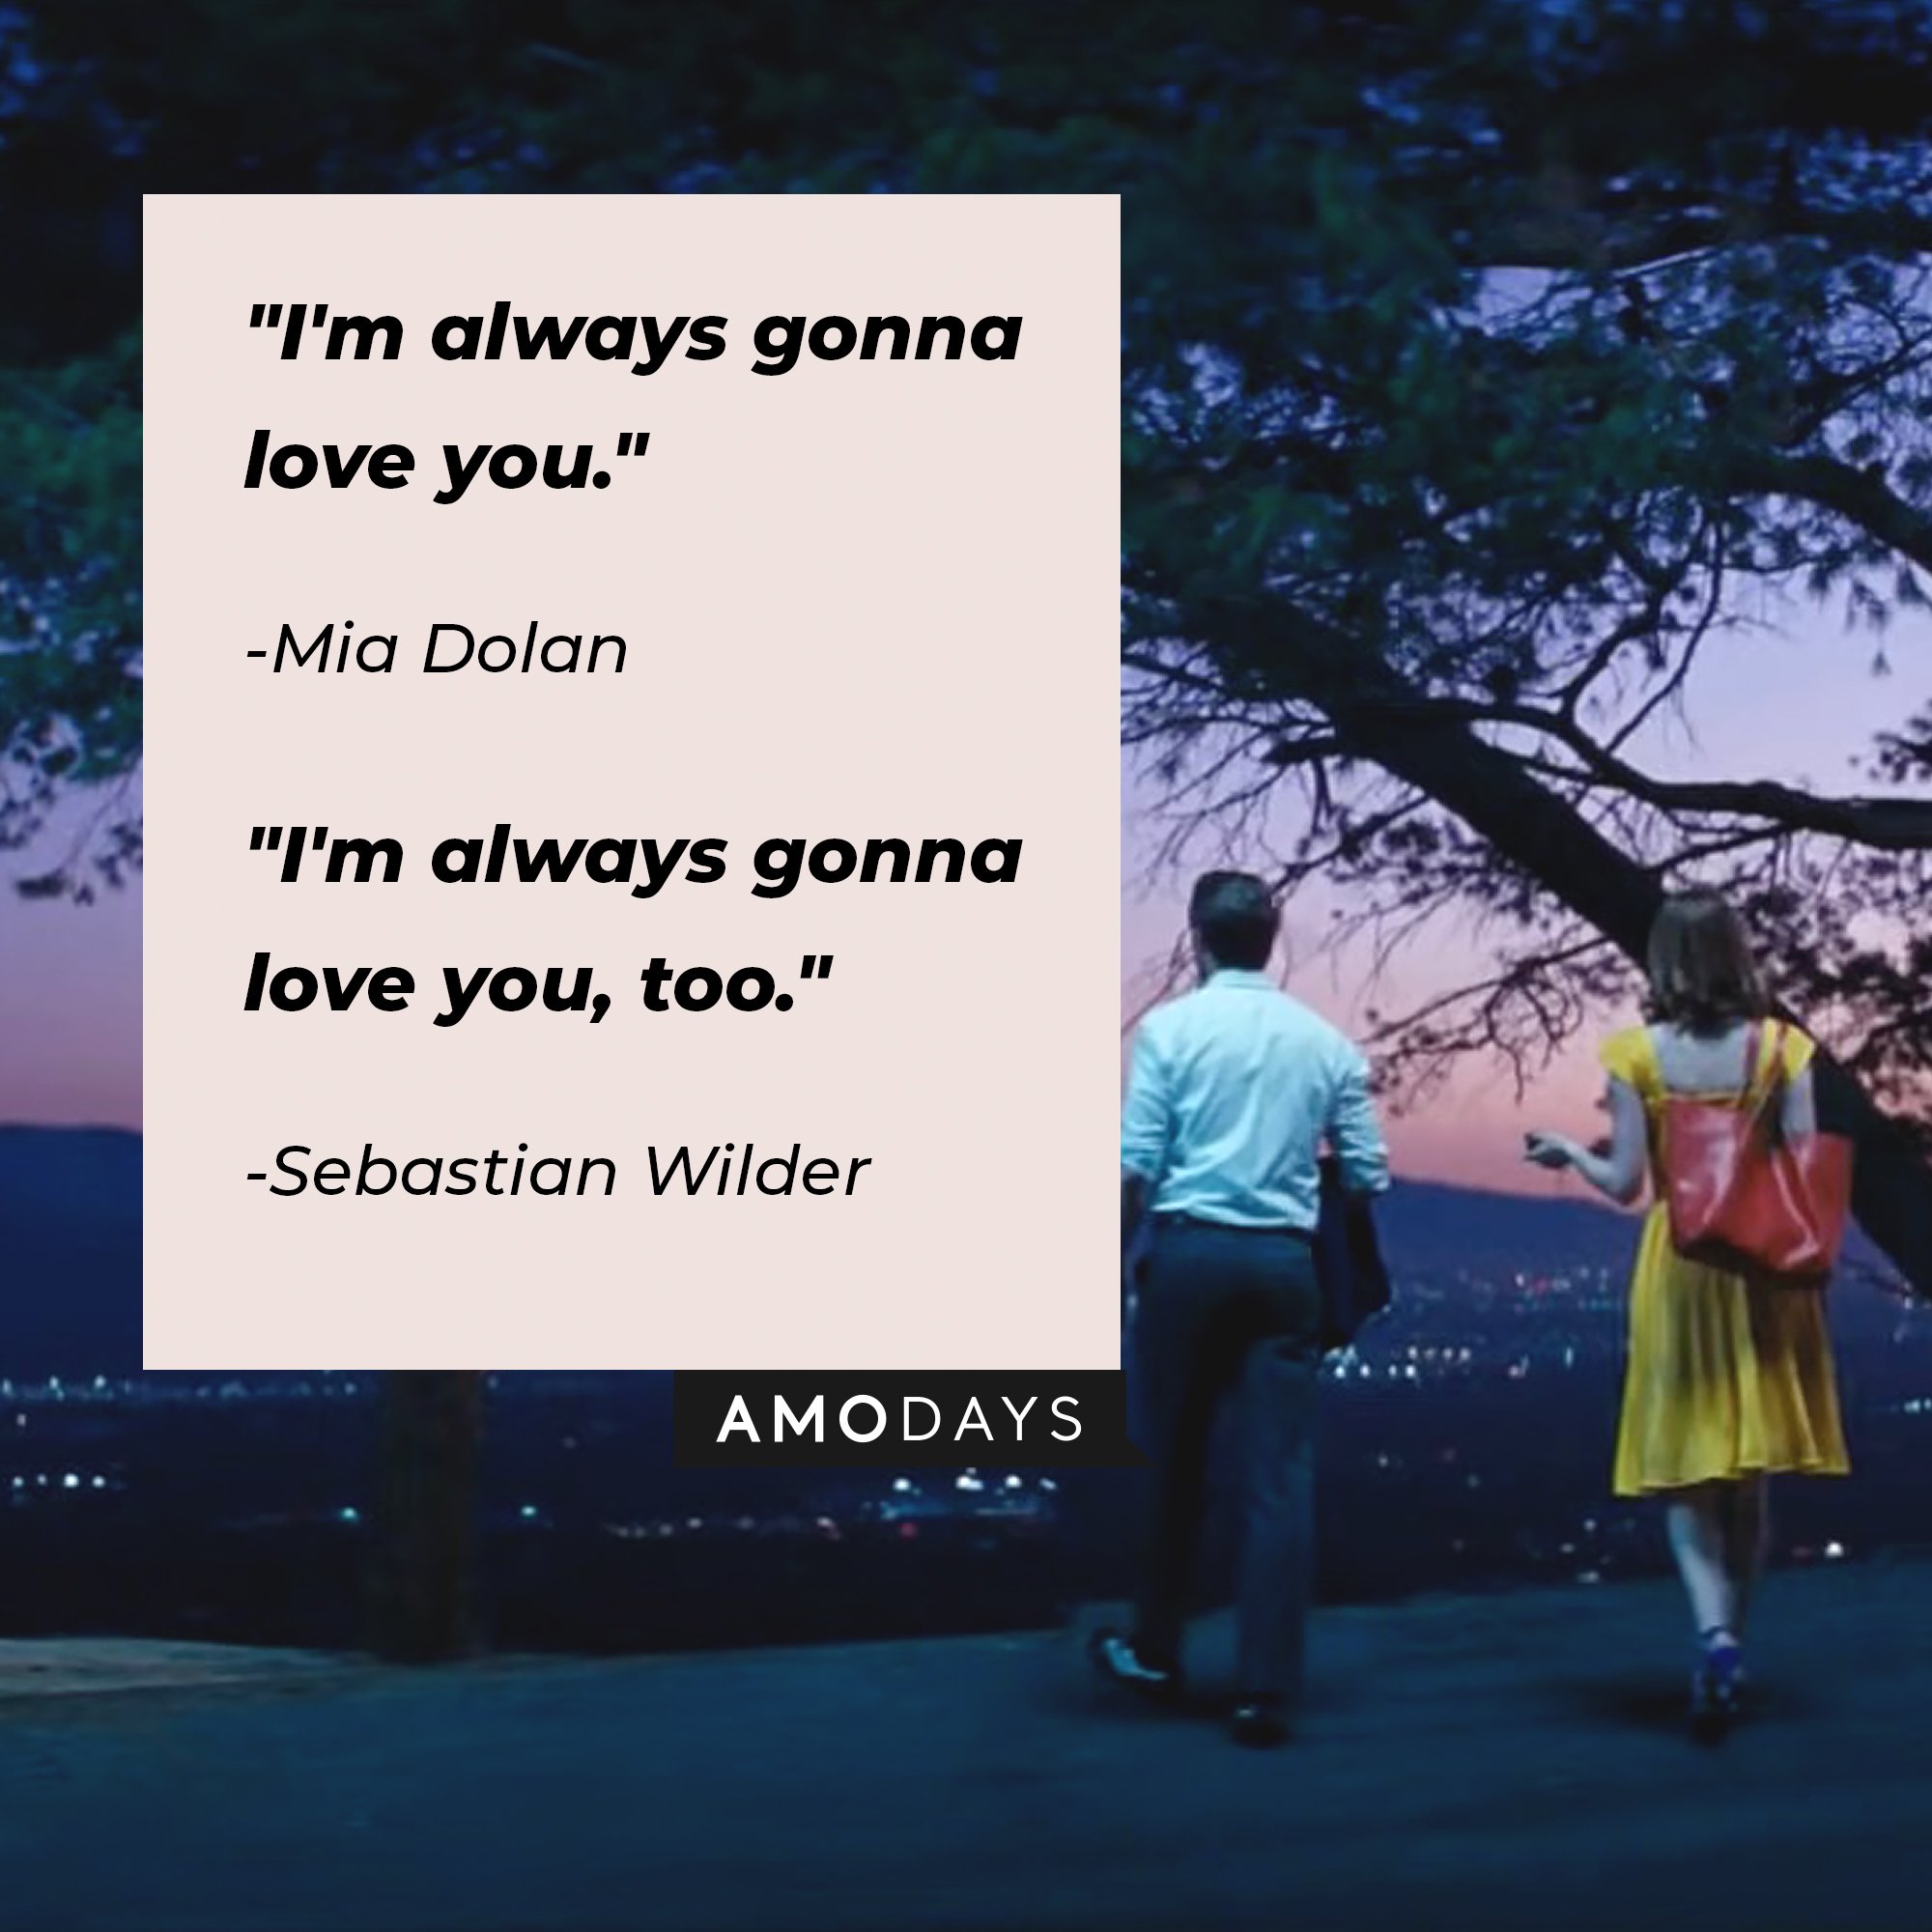 Mia Dolan’s quote: "I'm always gonna love you." plus Sebastian Wilder's quote: “I’m always gonna love you too.” | Image: AmoDays